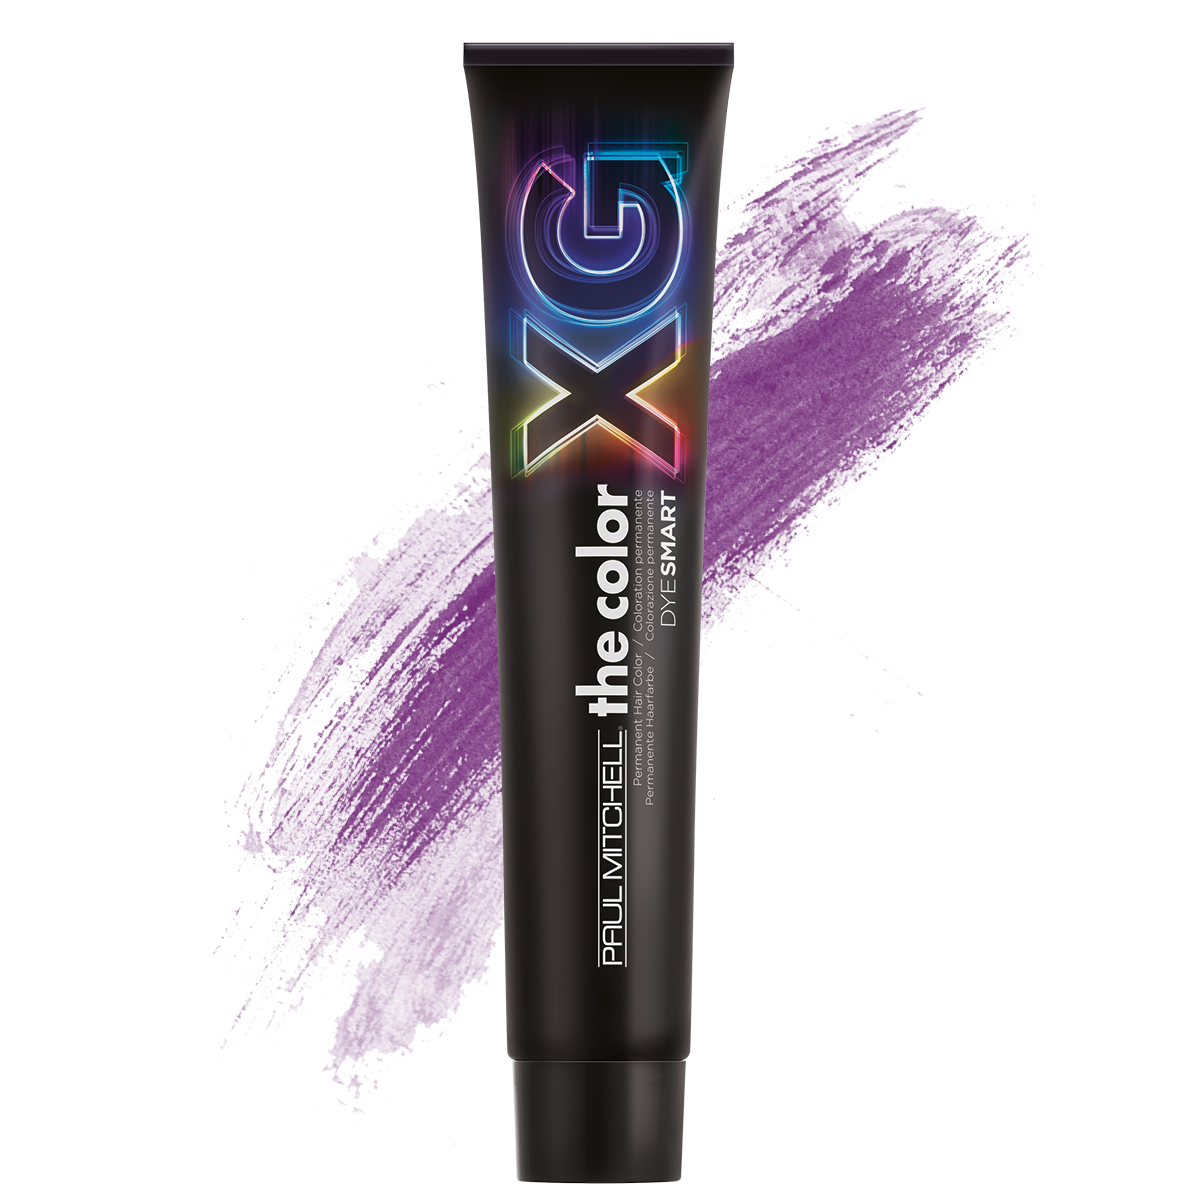 the color XG - Violet /6